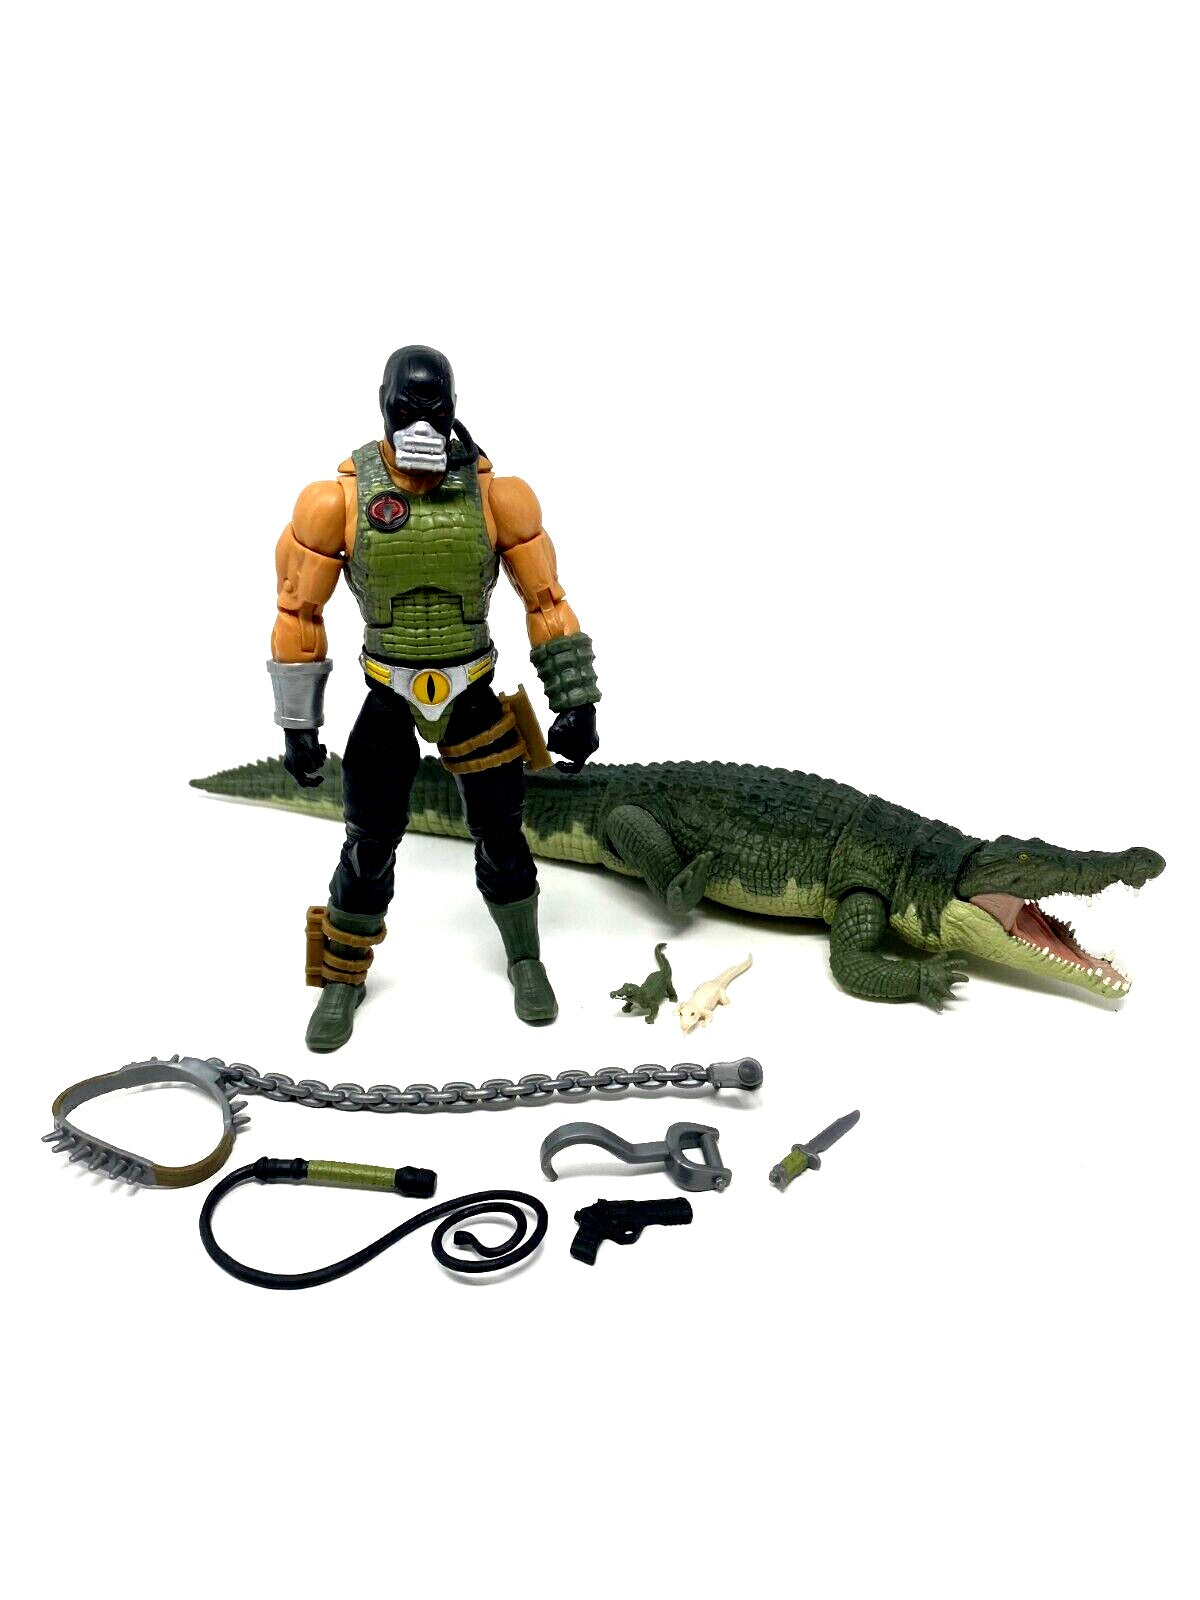 Hasbro Collectibles - G.I. Joe Classified Series Croc Master & Fiona Action Figure